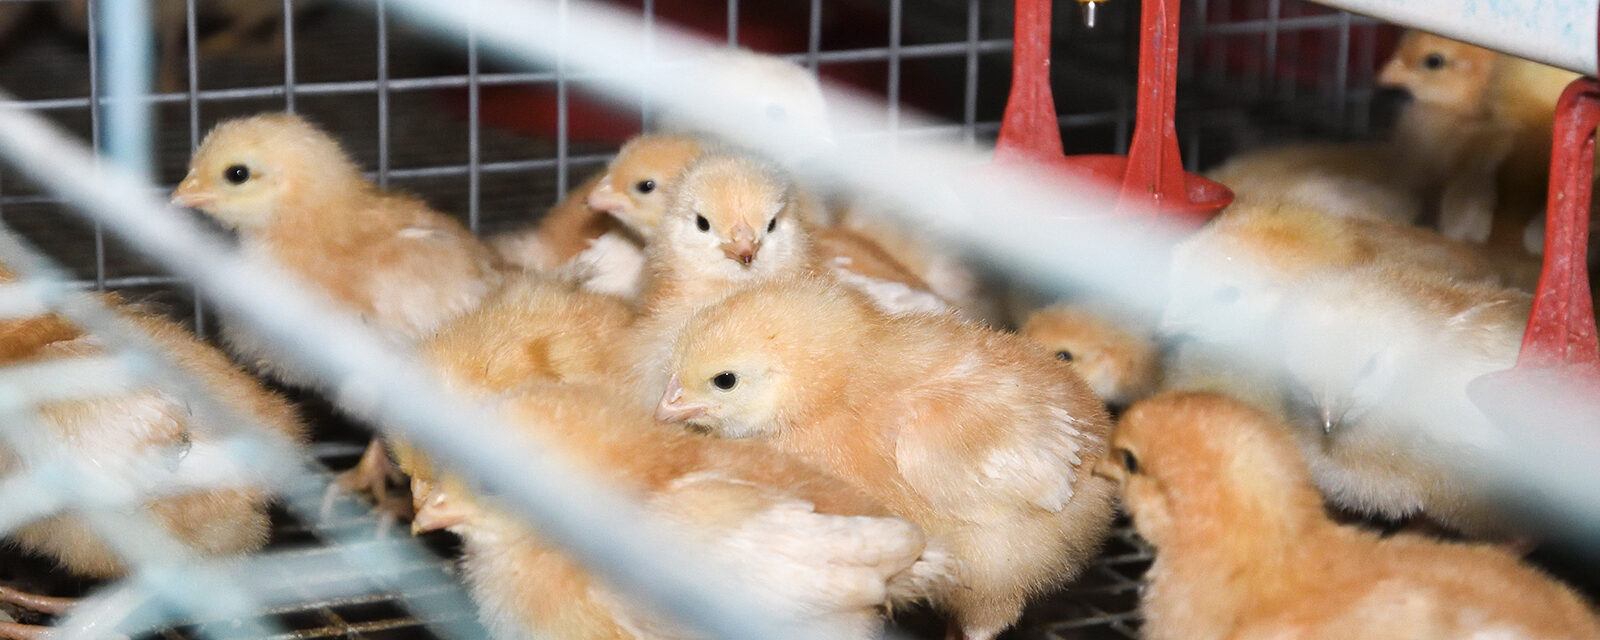 Chicks Cages On British Egg Farm